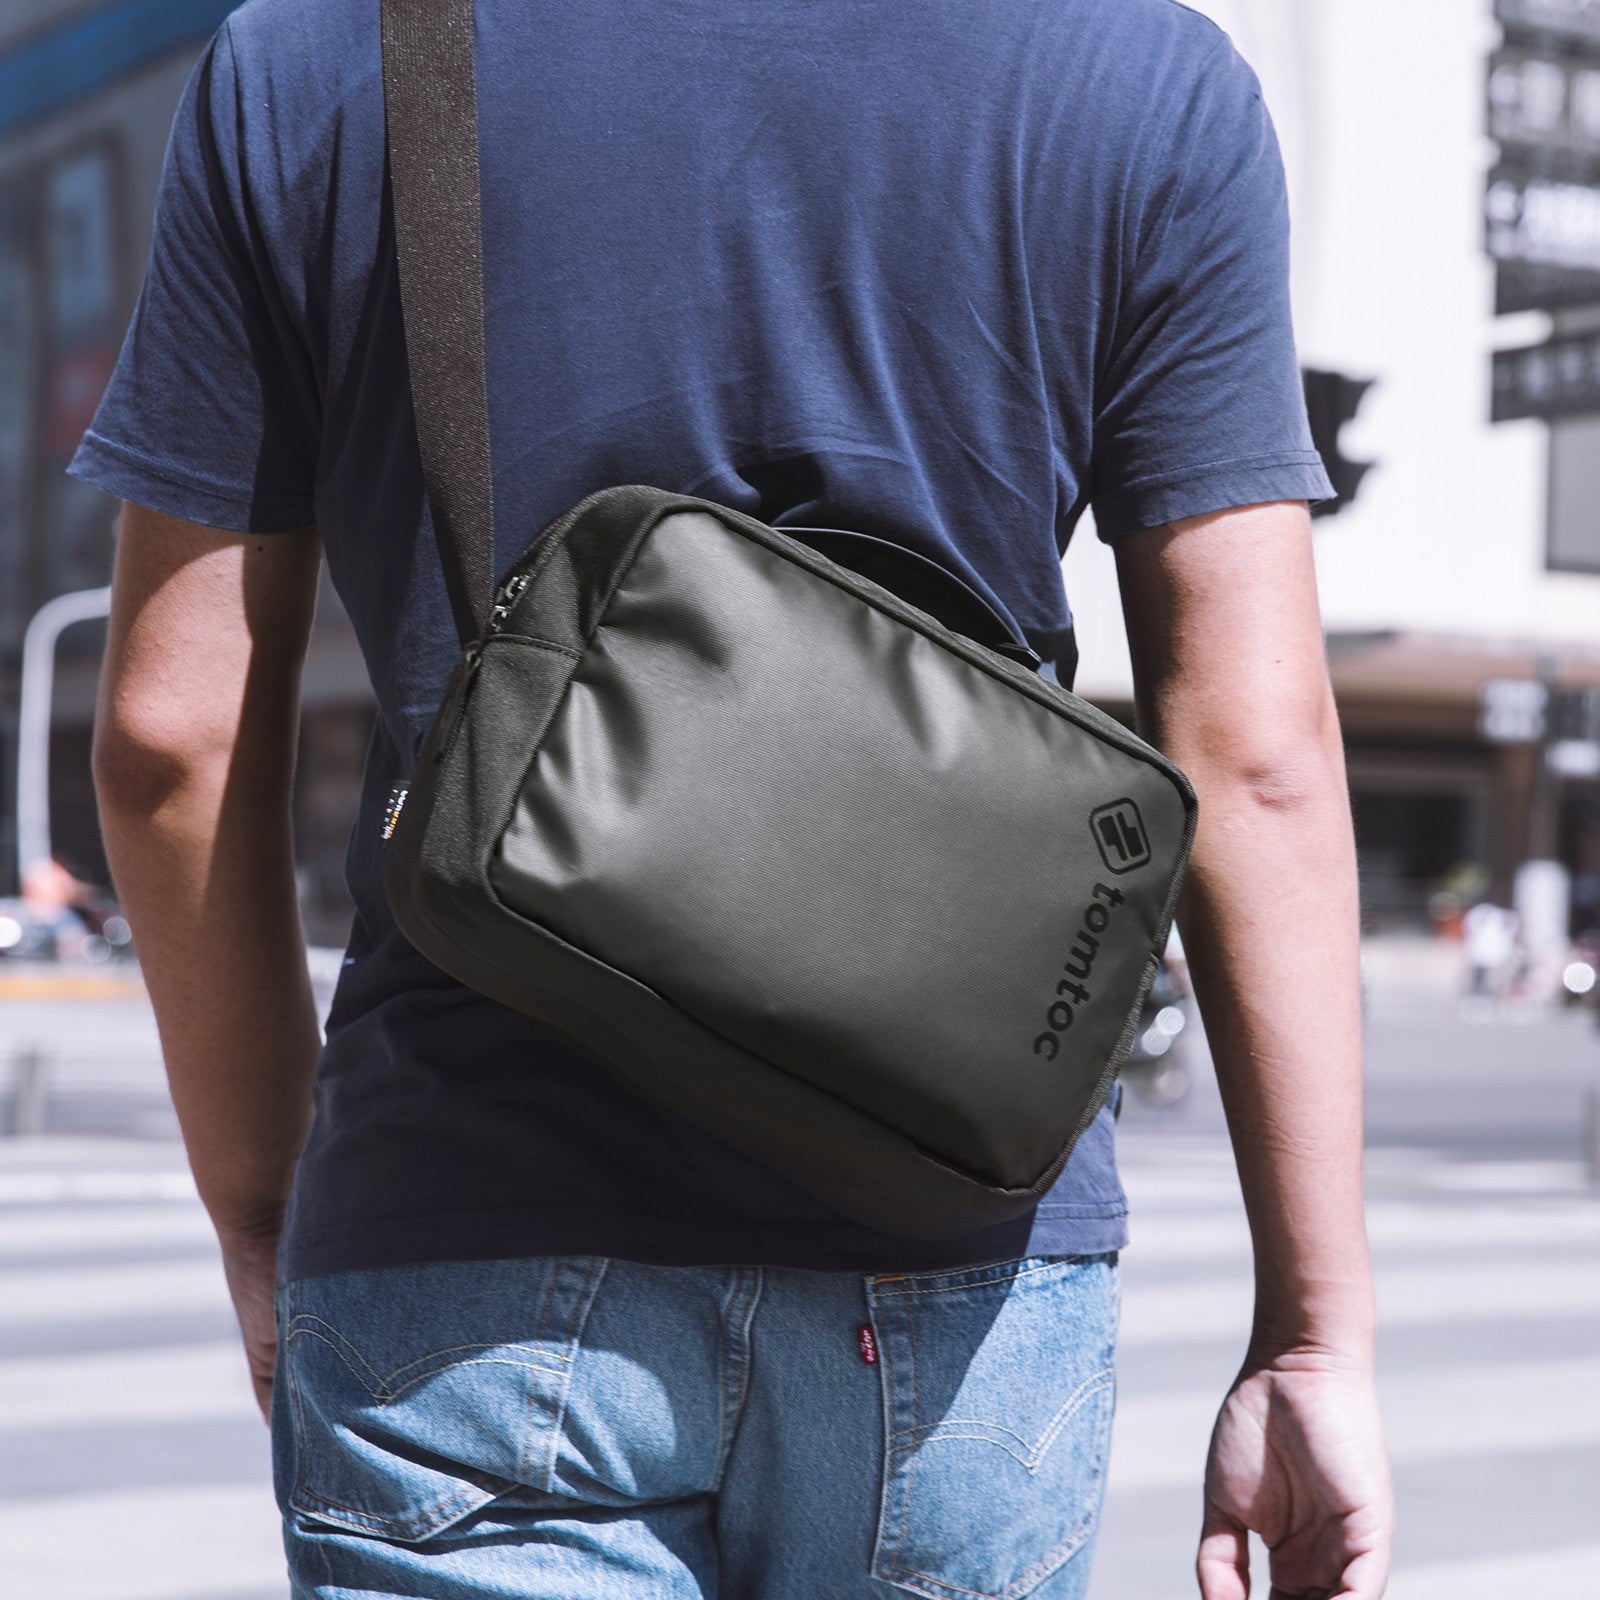 Sale - Premium Leather Messenger Bag for 7 tablets including iPad